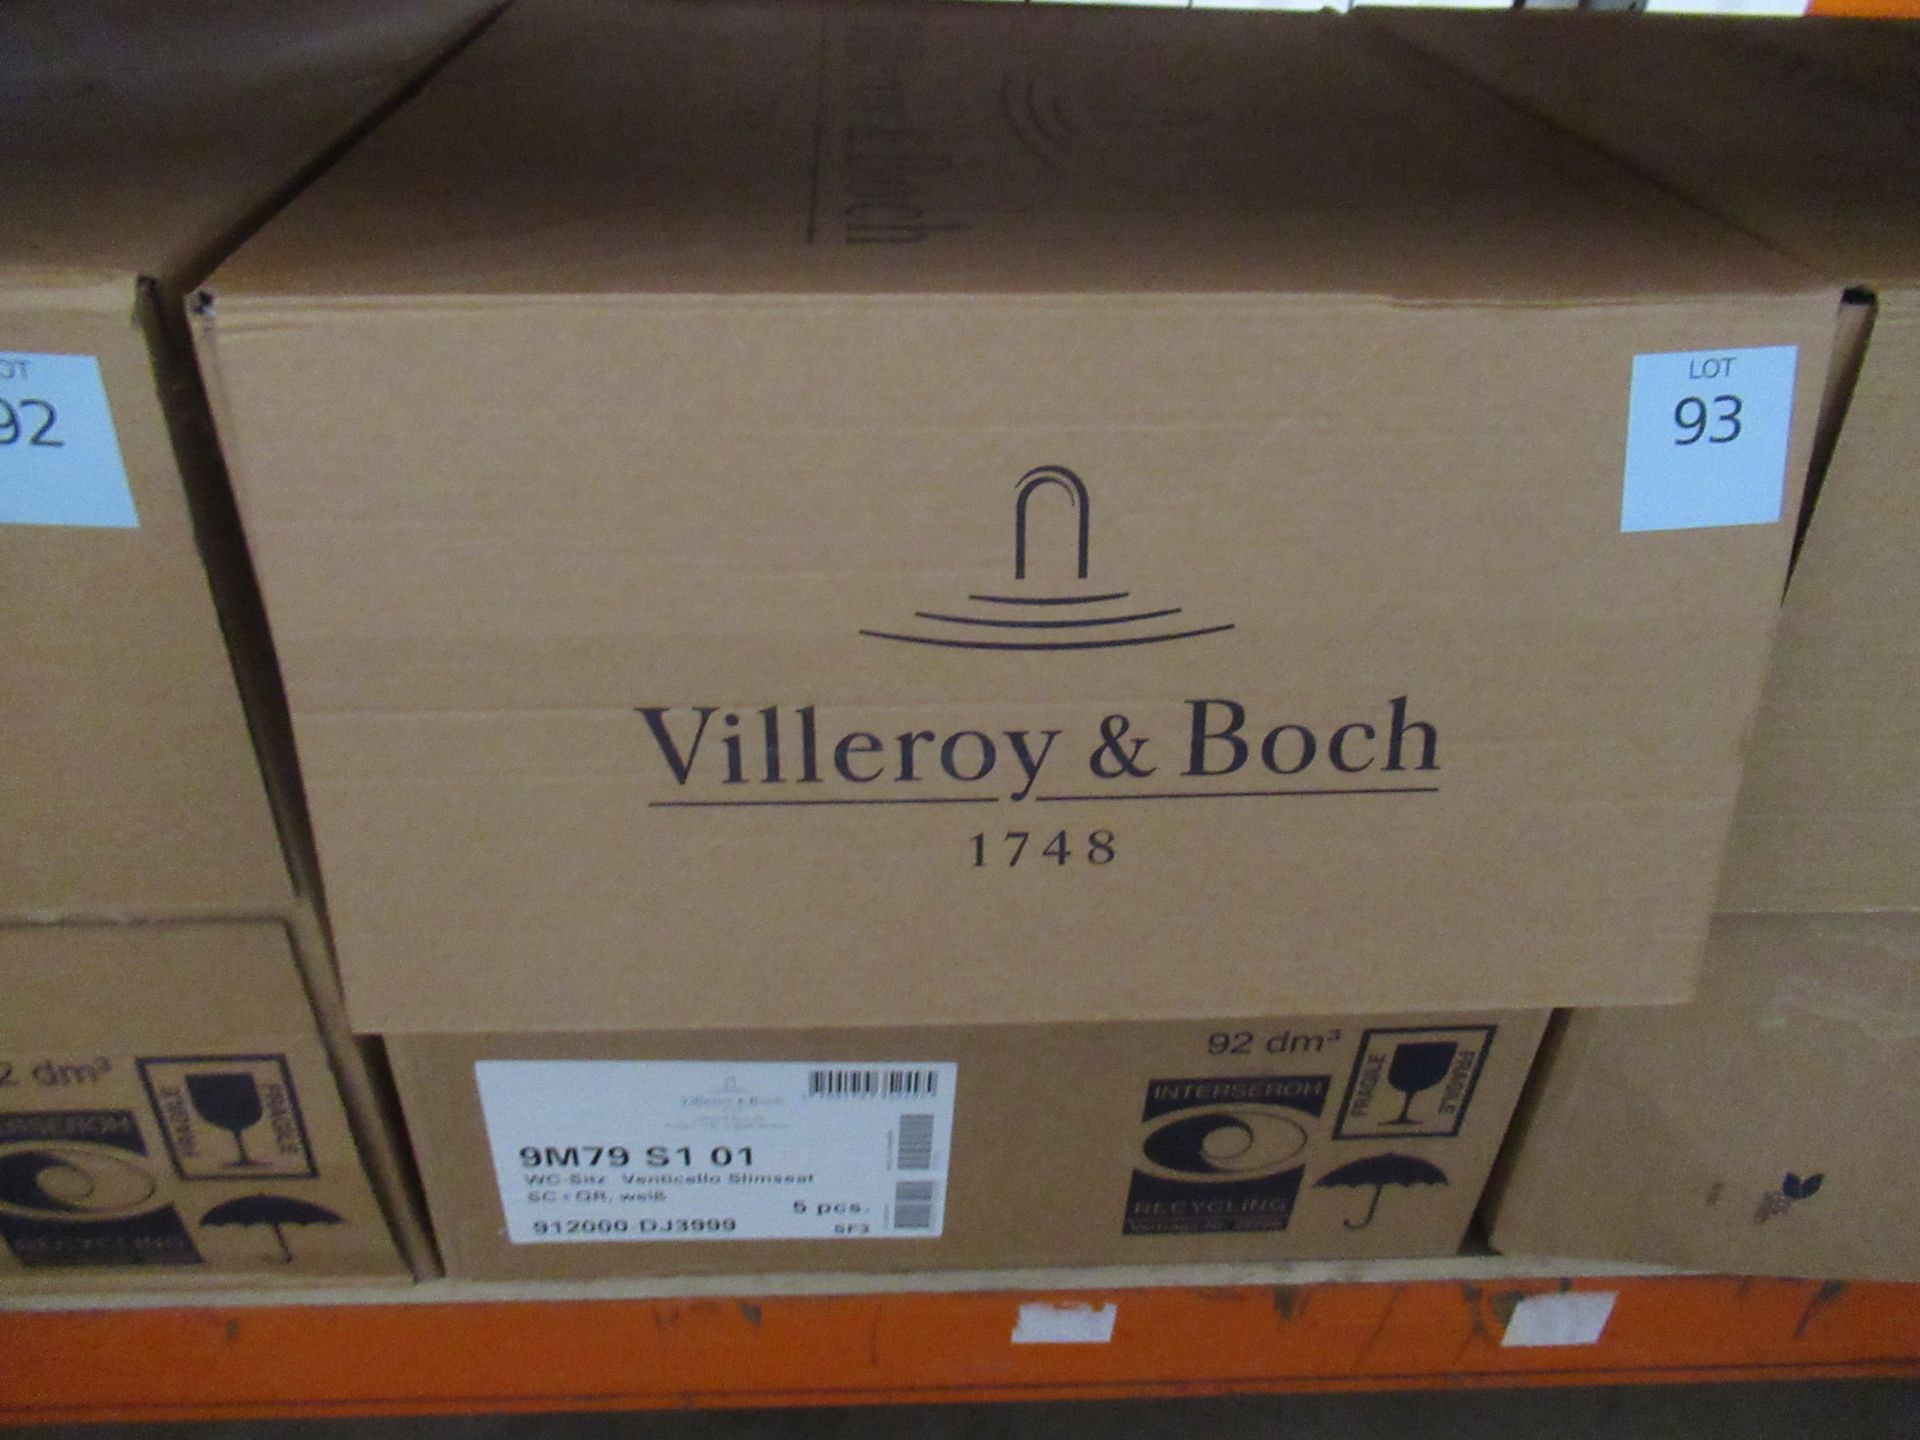 5 x Villeroy and Boch Toilet Seats, w.c-sitz venticello slimseat - Image 2 of 3